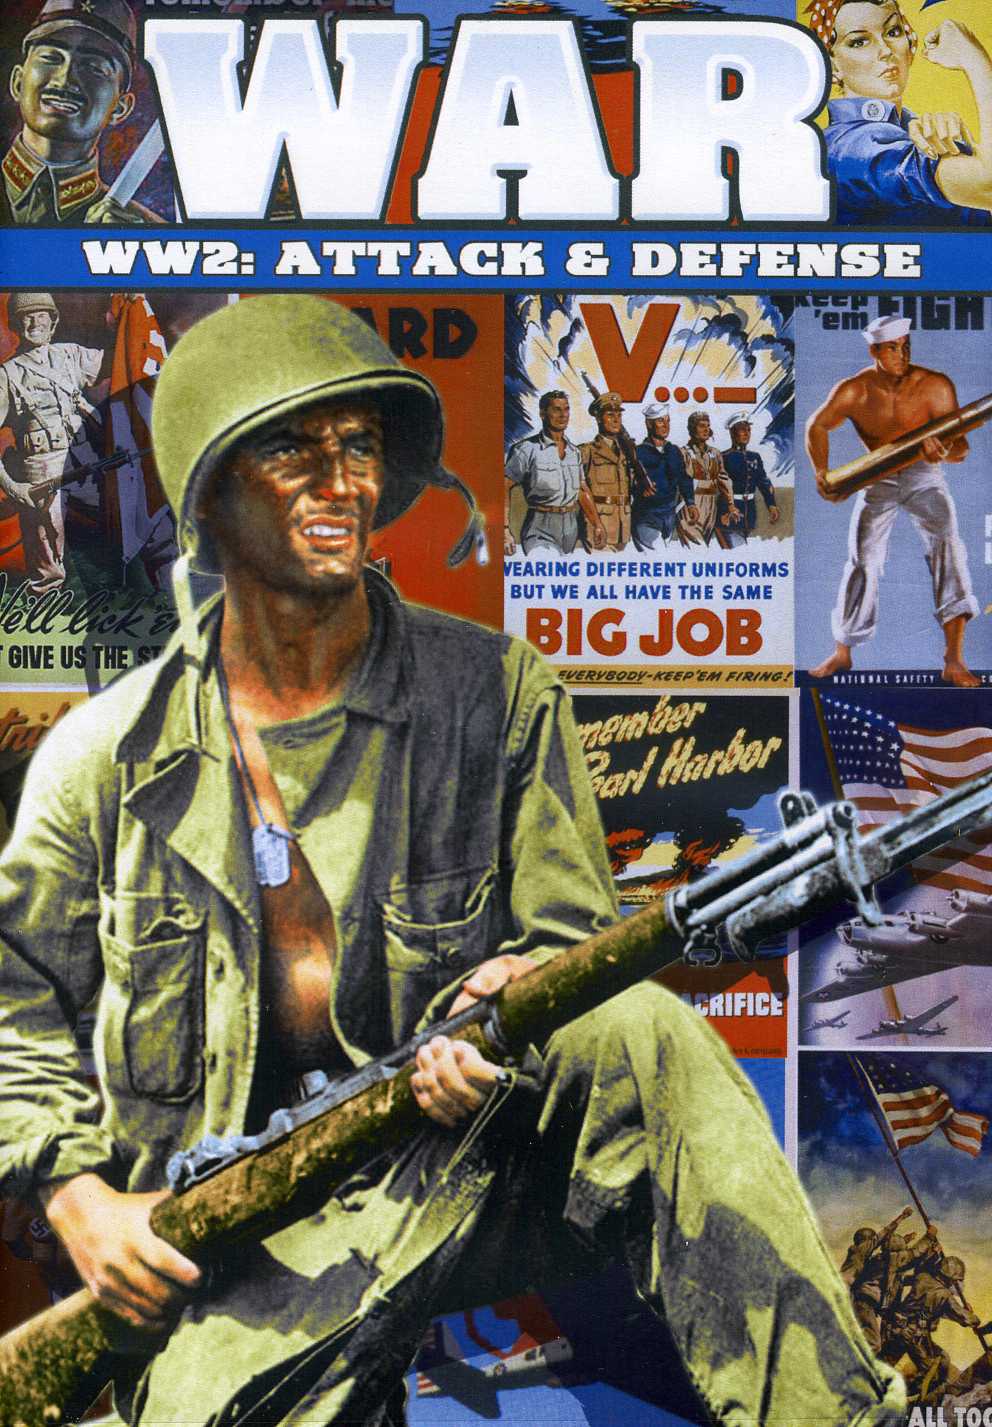 ATTACK & DEFENSE: RARE PATRIOTIC WORLD WAR II